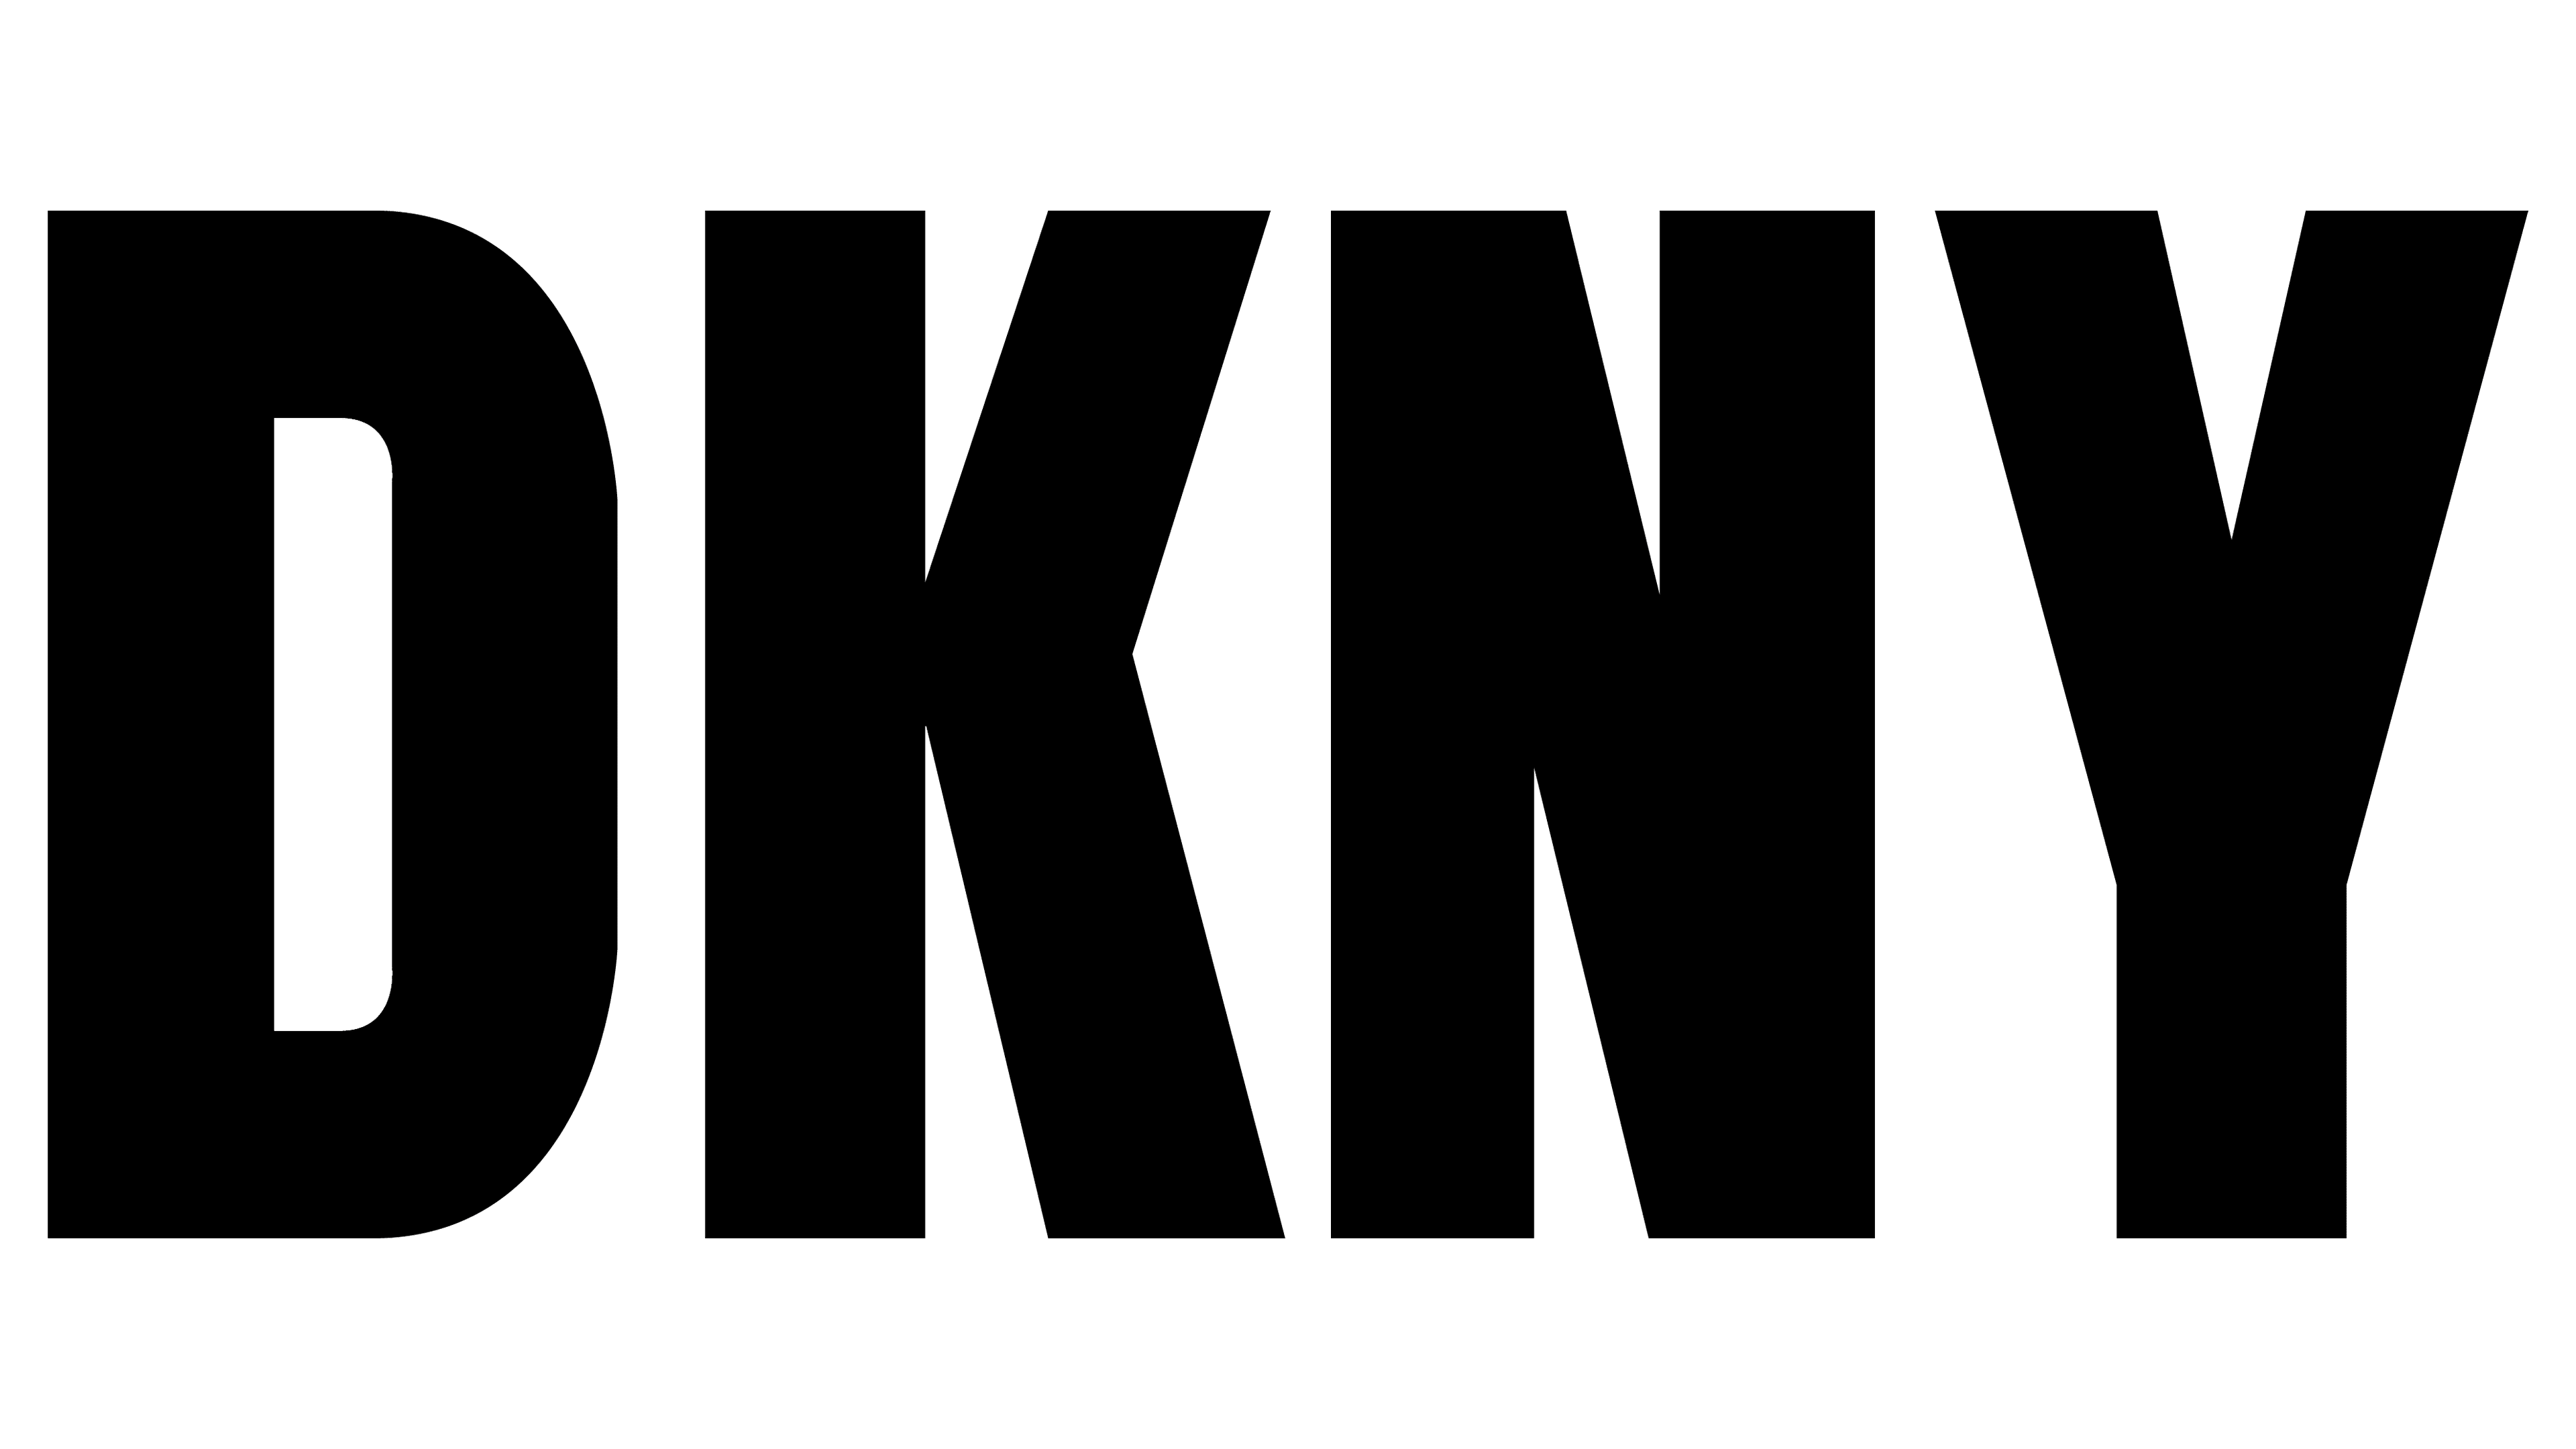 Donna Karan New York (DKNY) logo